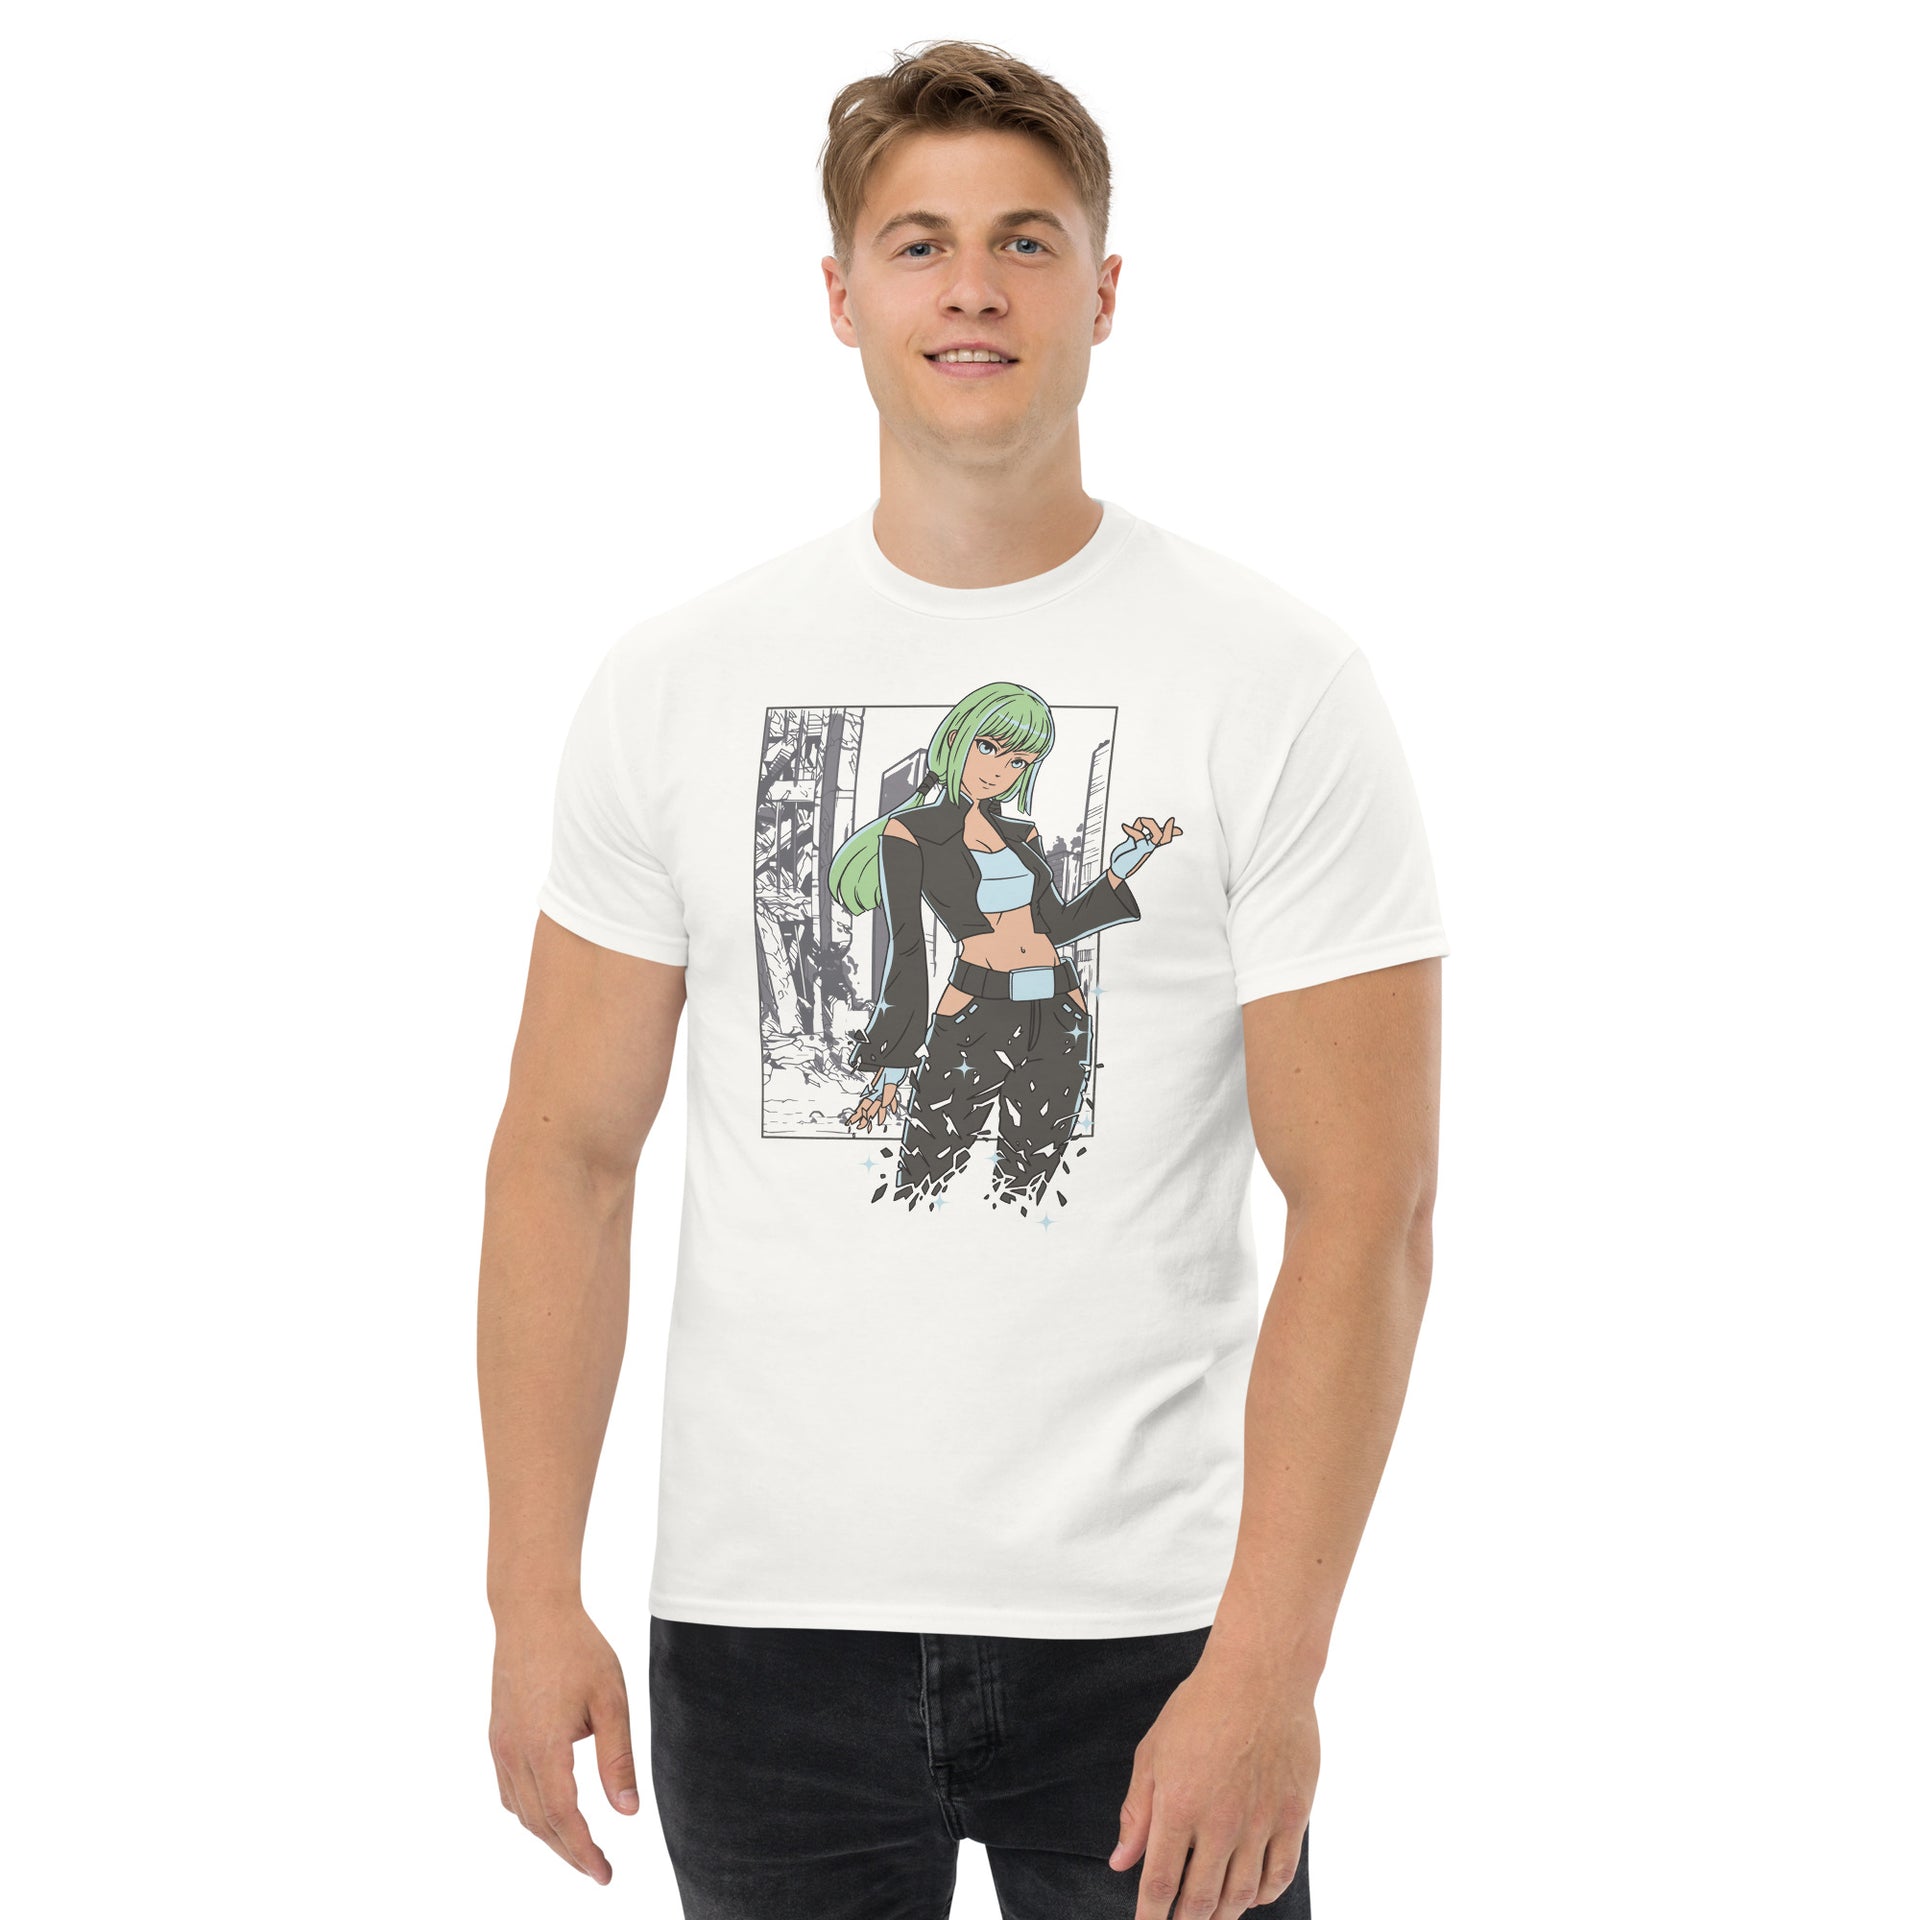 Post Apocalyptic Anime Girl Men's T-Shirt